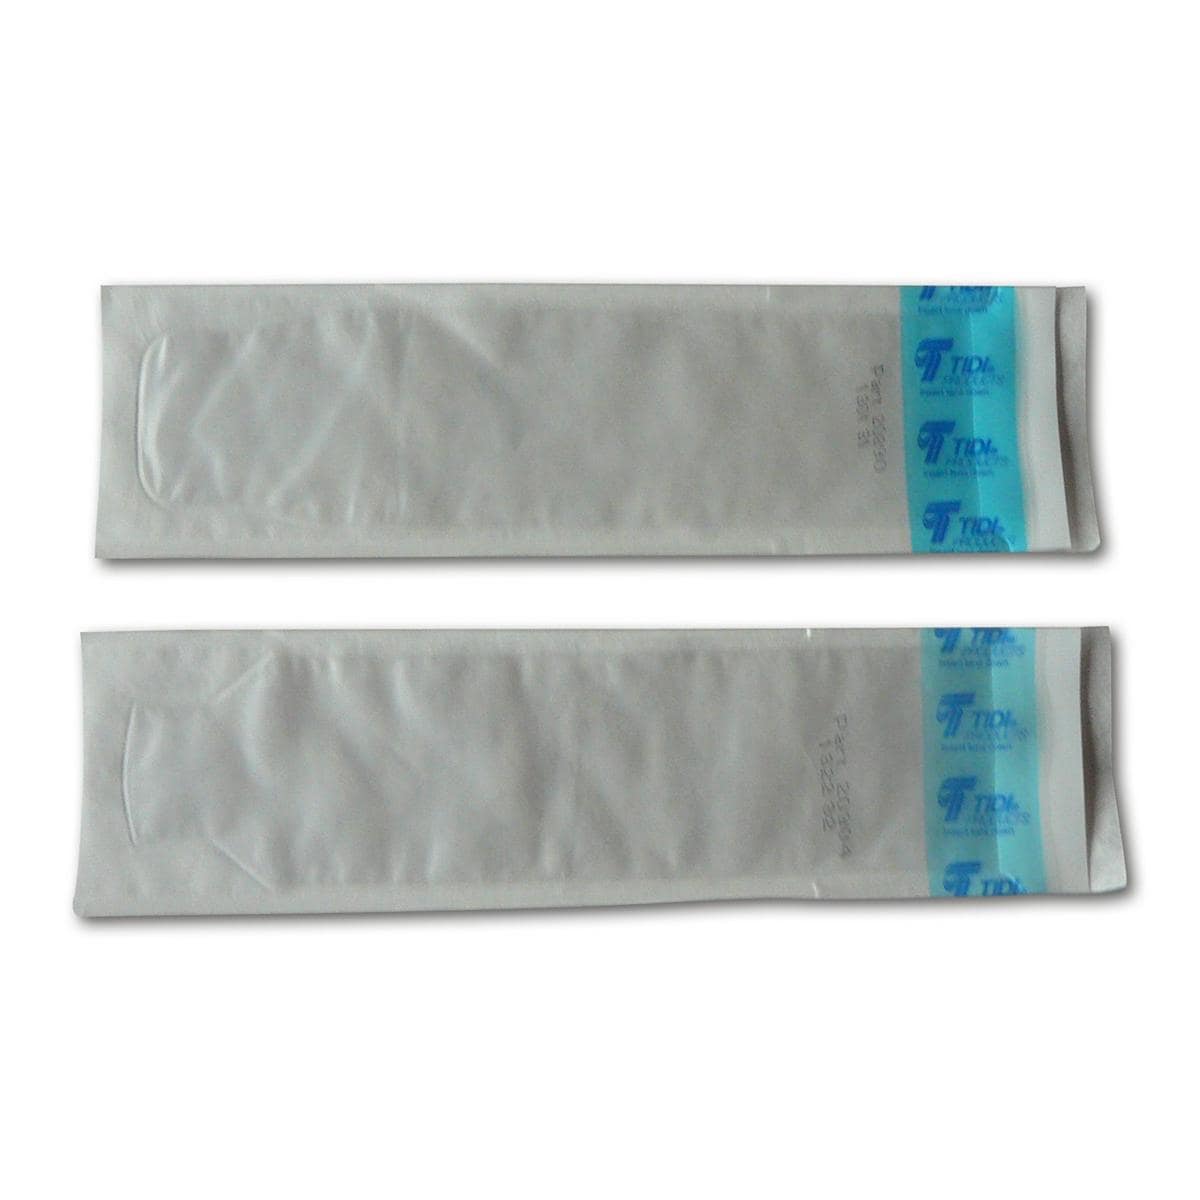 Hygiene-Schutzhüllen für Sensoren - (2) Hüllen für Sensor 1.0 oder Universalsensor,Packung 500 Stück